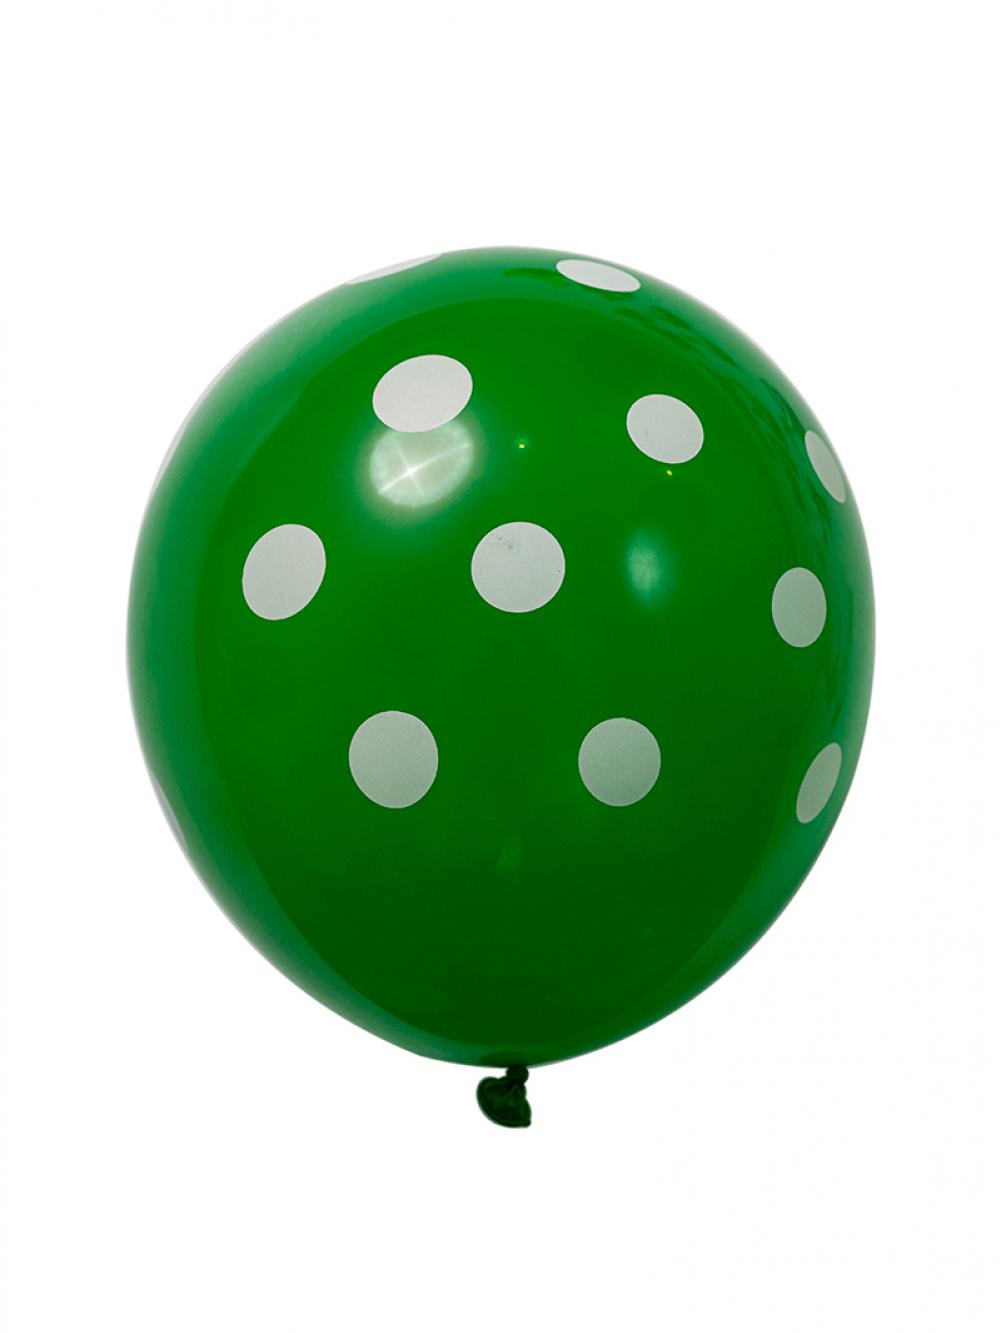 12 Inch Standard Polka Dot Balloons Green Balloon White Dot (100PCS)